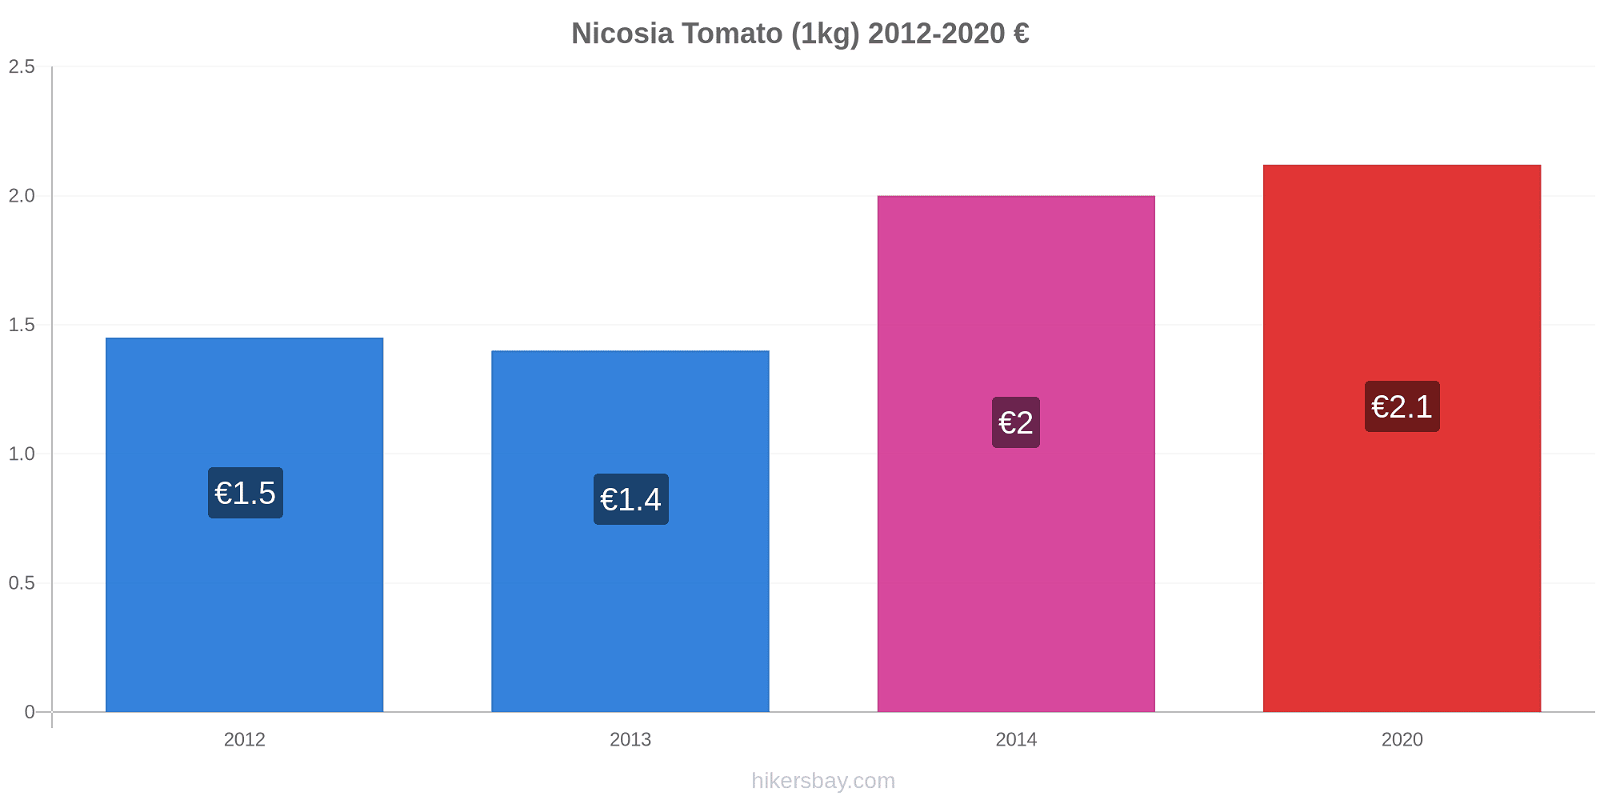 Nicosia price changes Tomato (1kg) hikersbay.com